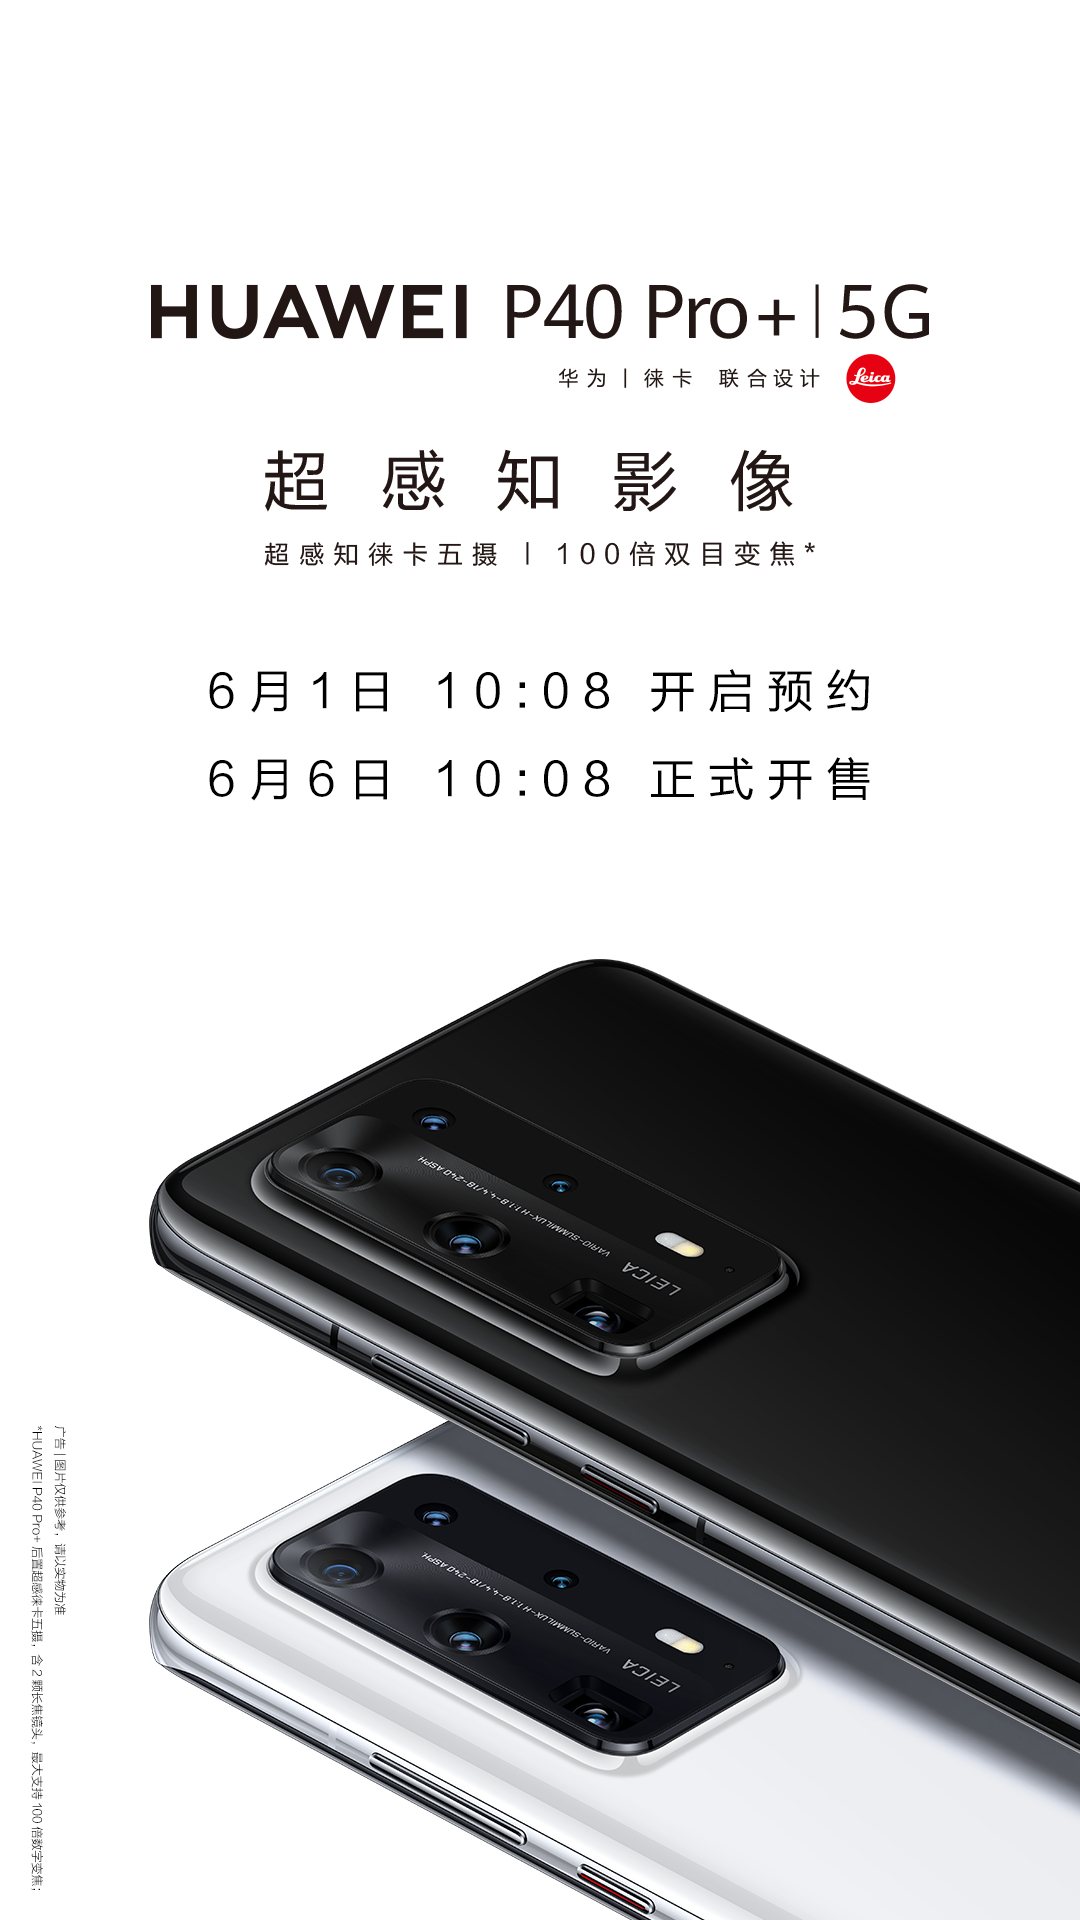 https://www.gizmochina.com/wp-content/uploads/2020/05/Huawei-P40-Pro-Plus-Sale-China.jpg